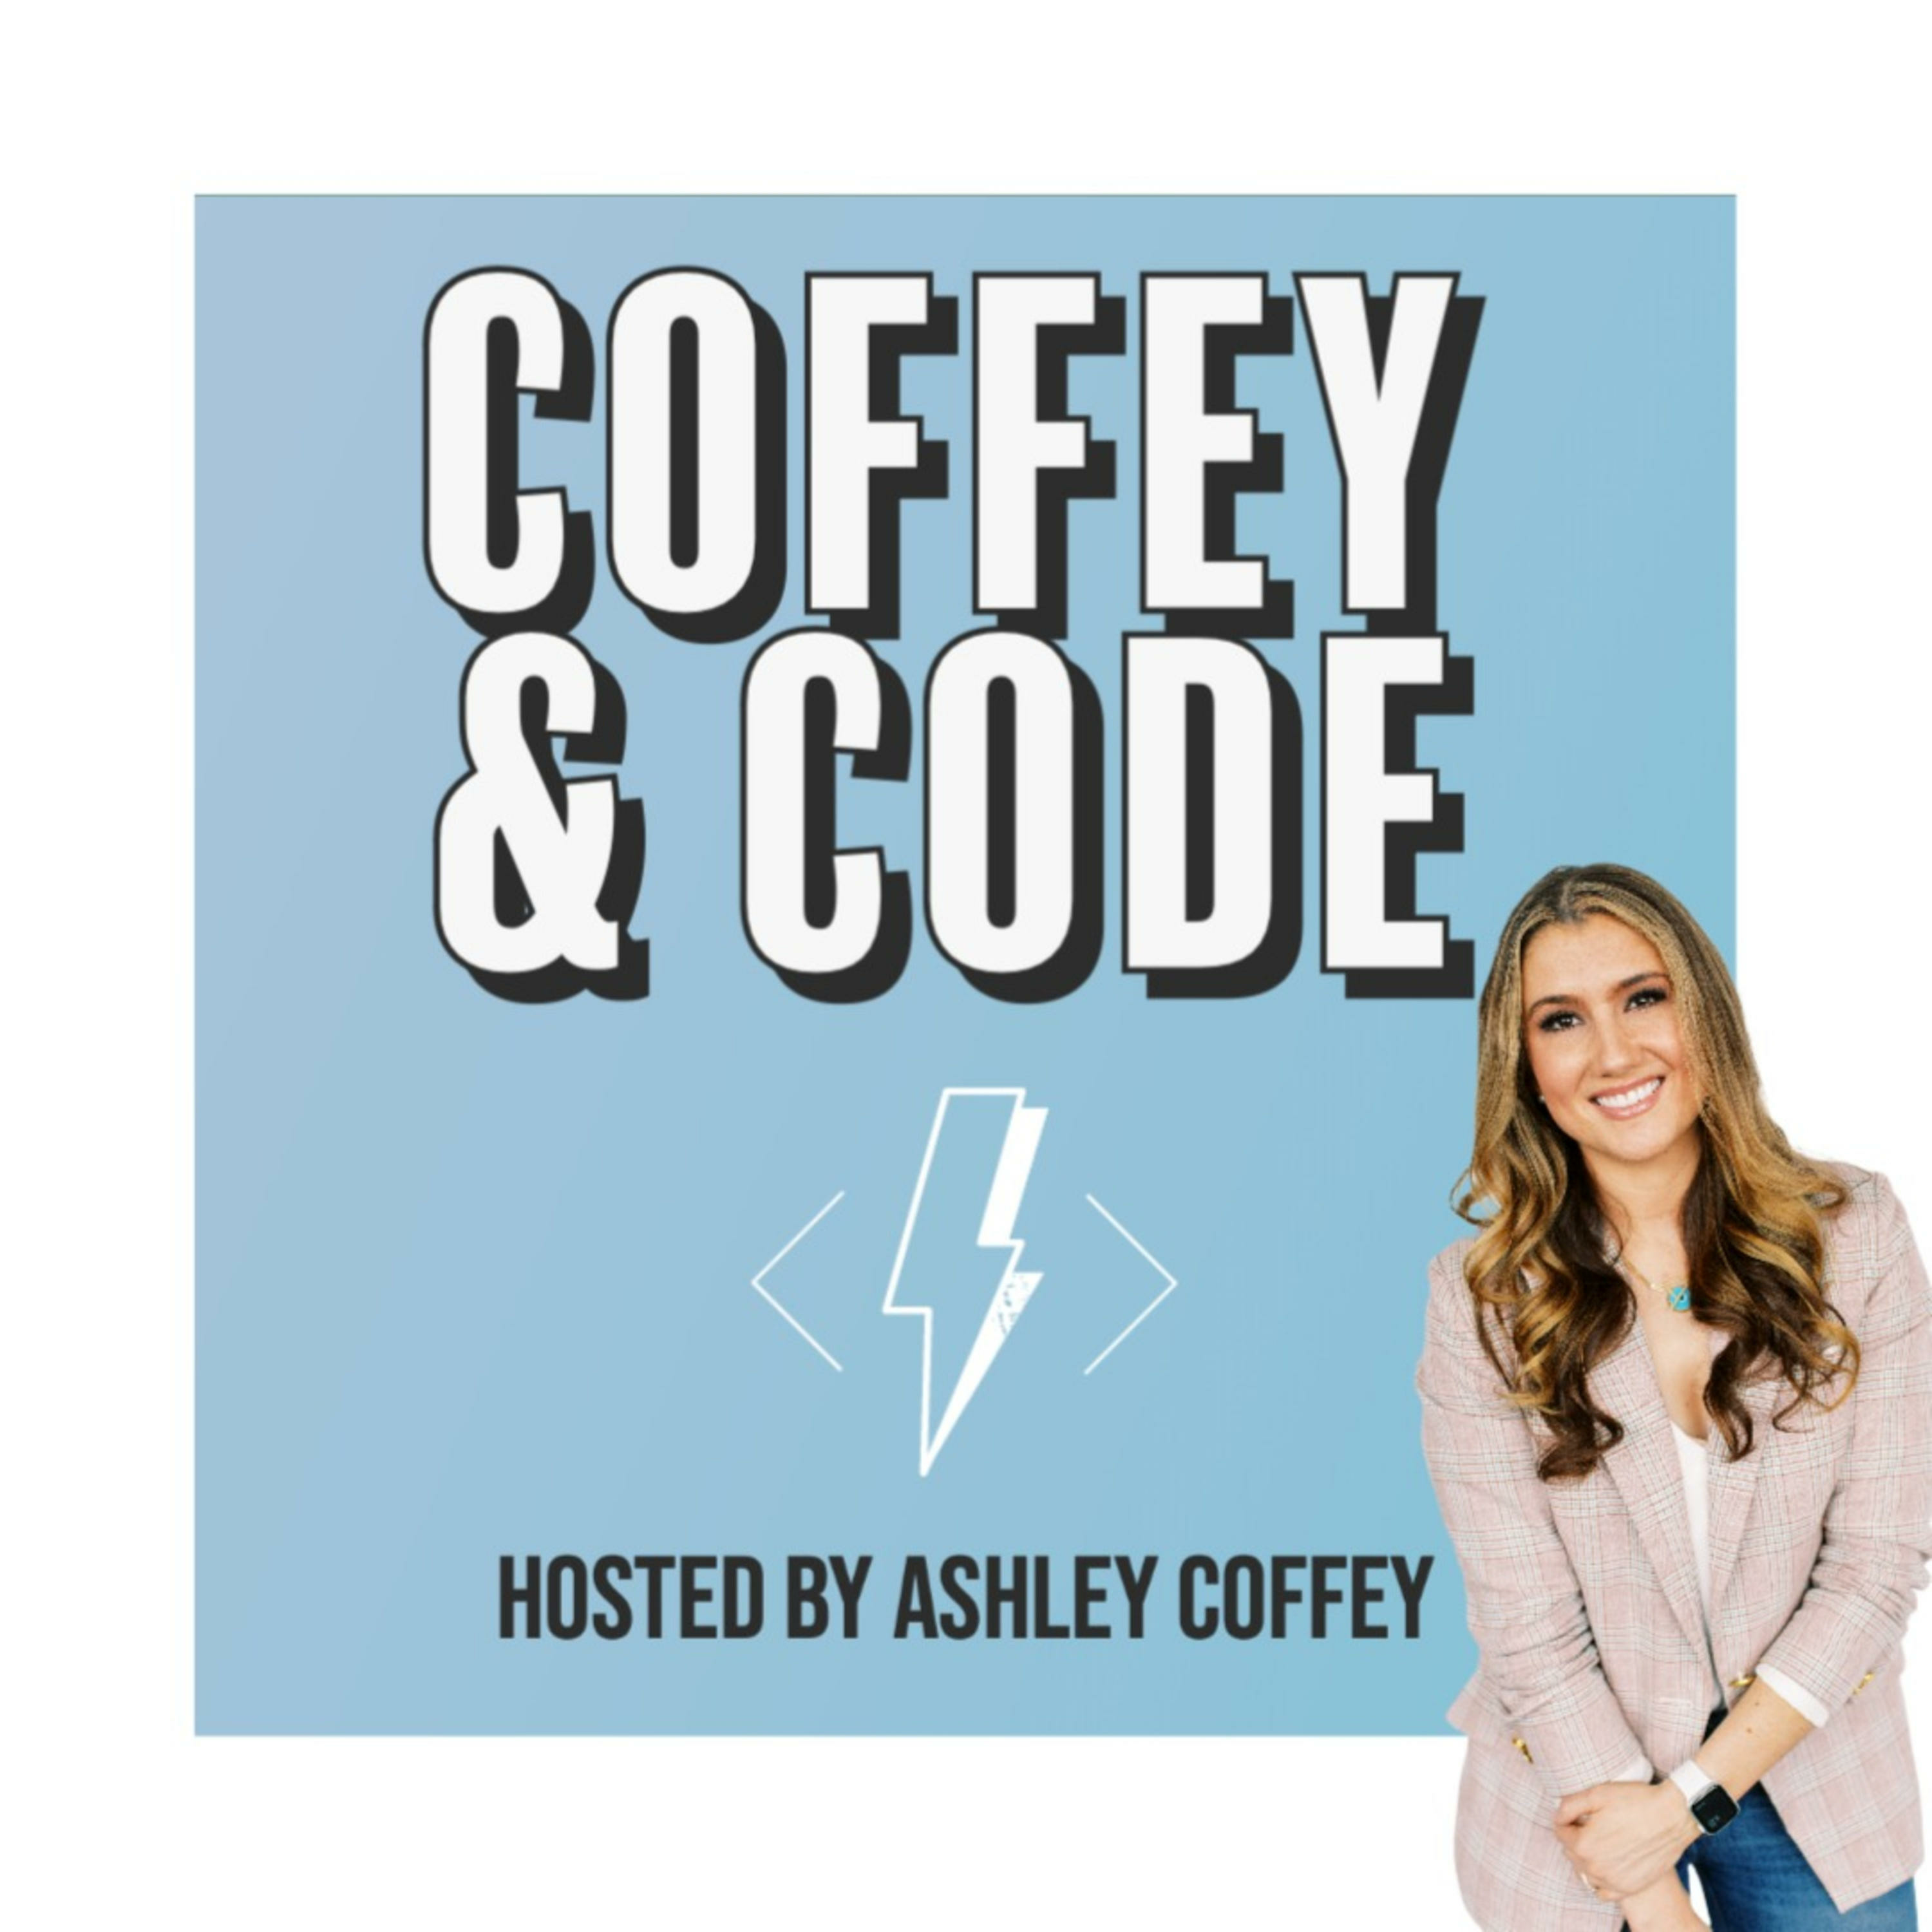 Coffey & Code podcast show image